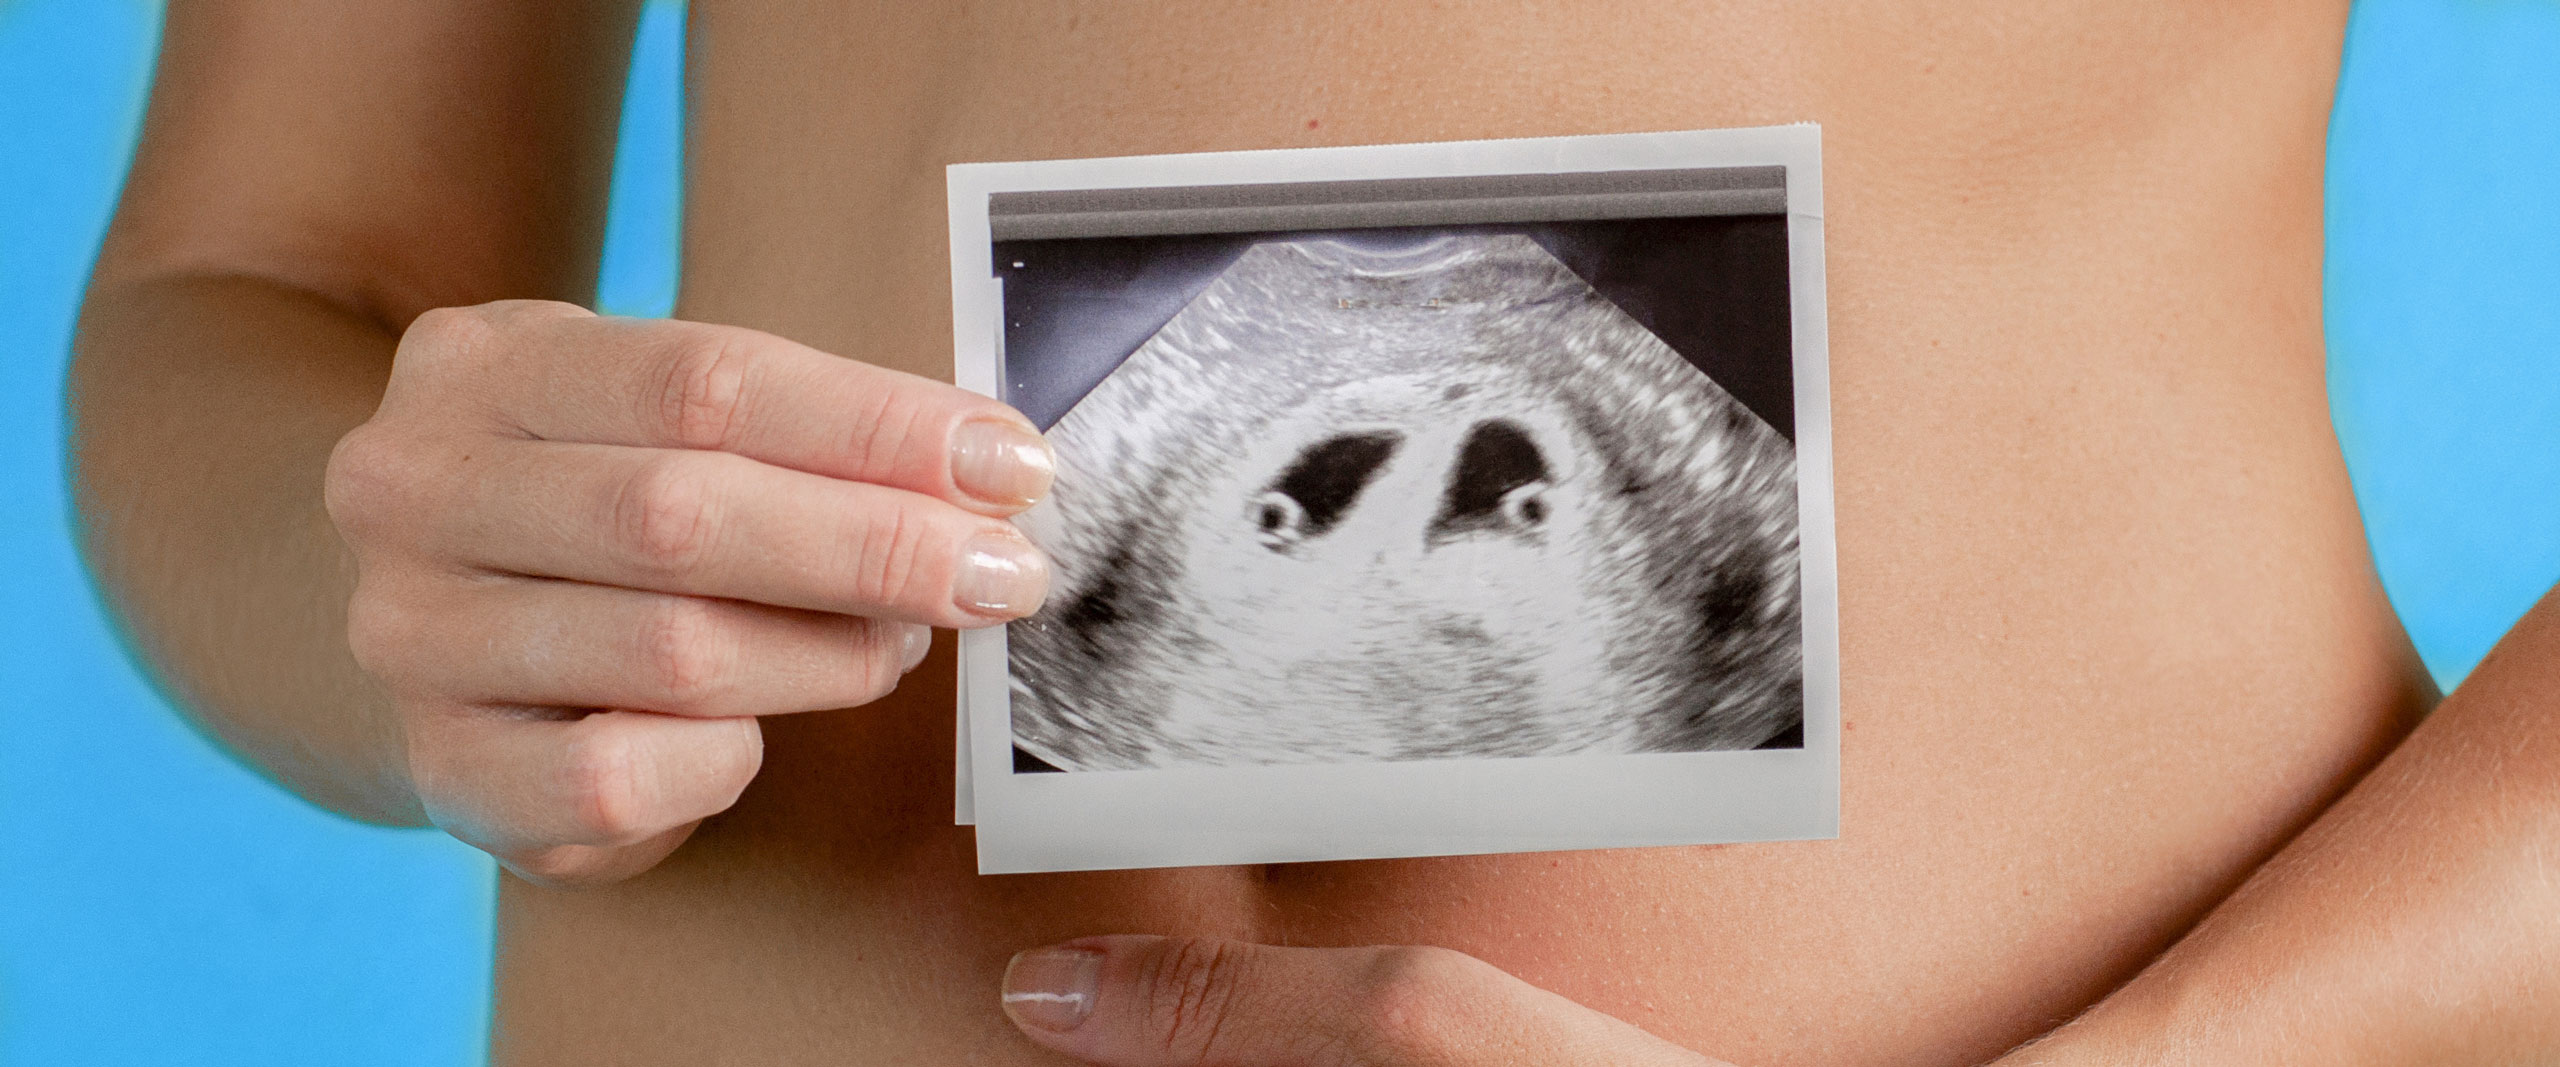 Ultraschallbild einer Zwillingsschwangerschaft